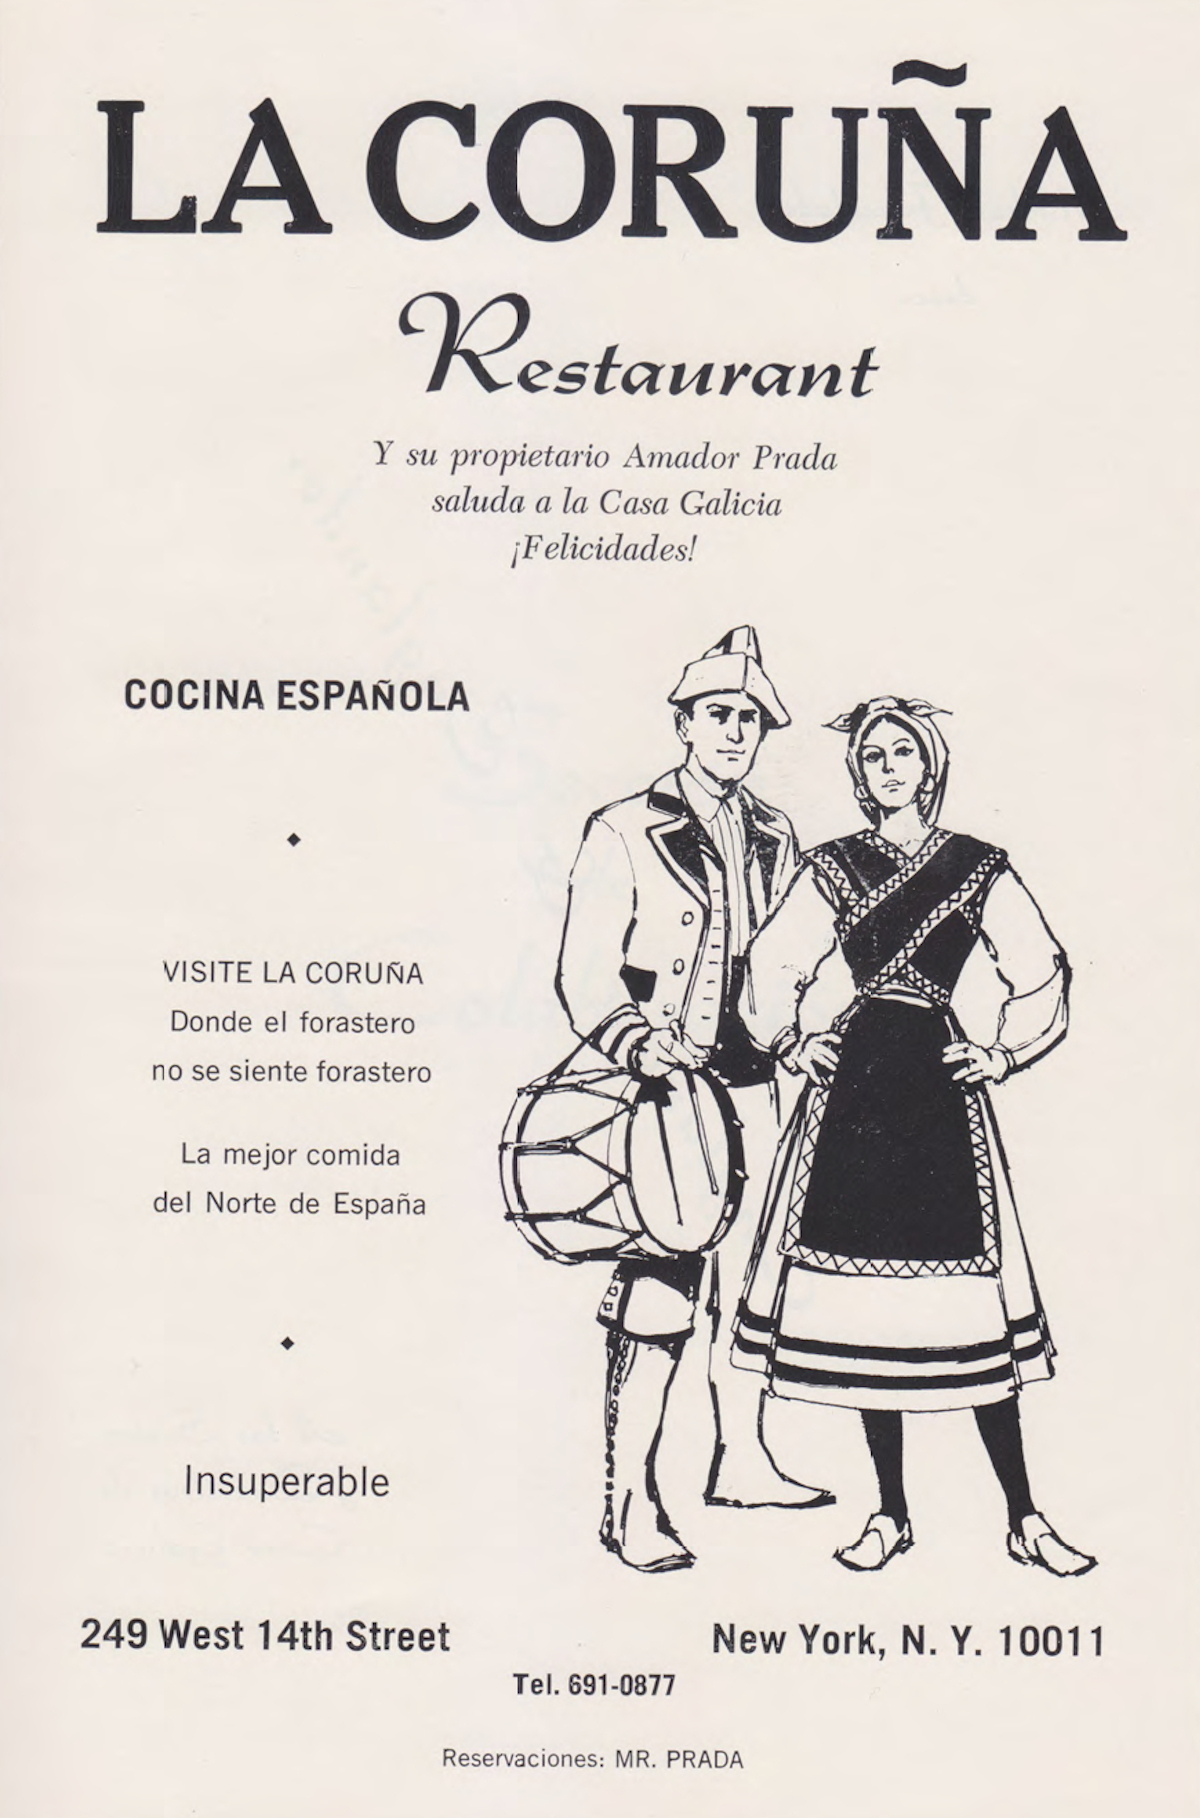 La Coruña Bar & Restaurant > 249 W 14th St, New York │ 1940s-1990s (Memorias da Casa Galicia)